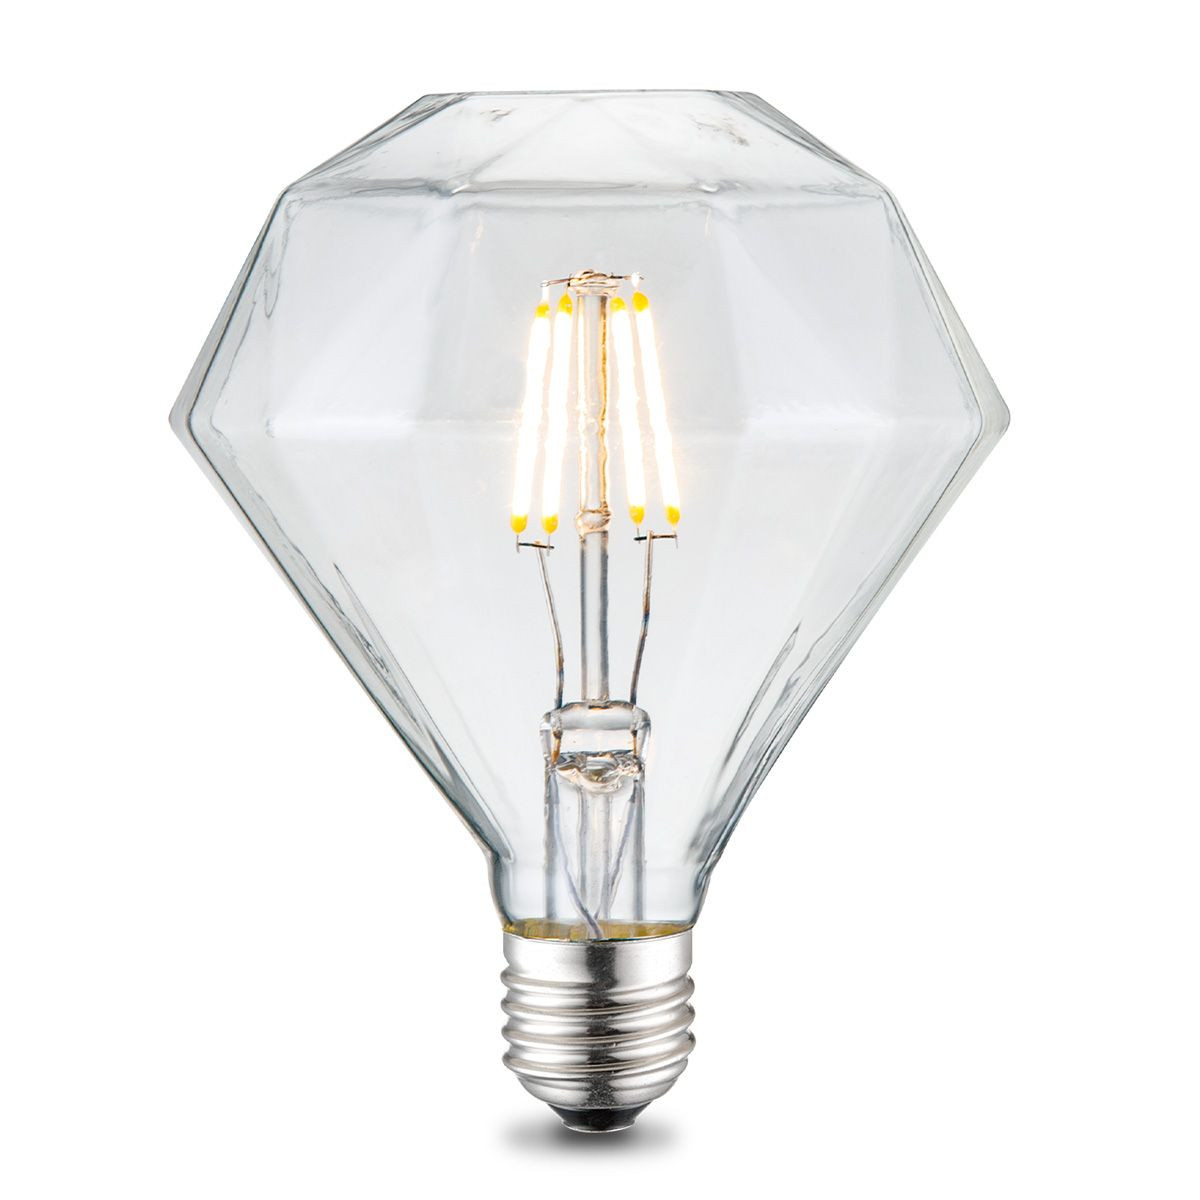 Edison Vintage LED lamp E27 LED filament lichtbron, Deco, Diamond D112, 11.2/11.2/13.8cm, Helder, Retro LED lamp Dimbaar, 4W 320lm 3000K, warm wit licht, geschikt voor E27 fitting